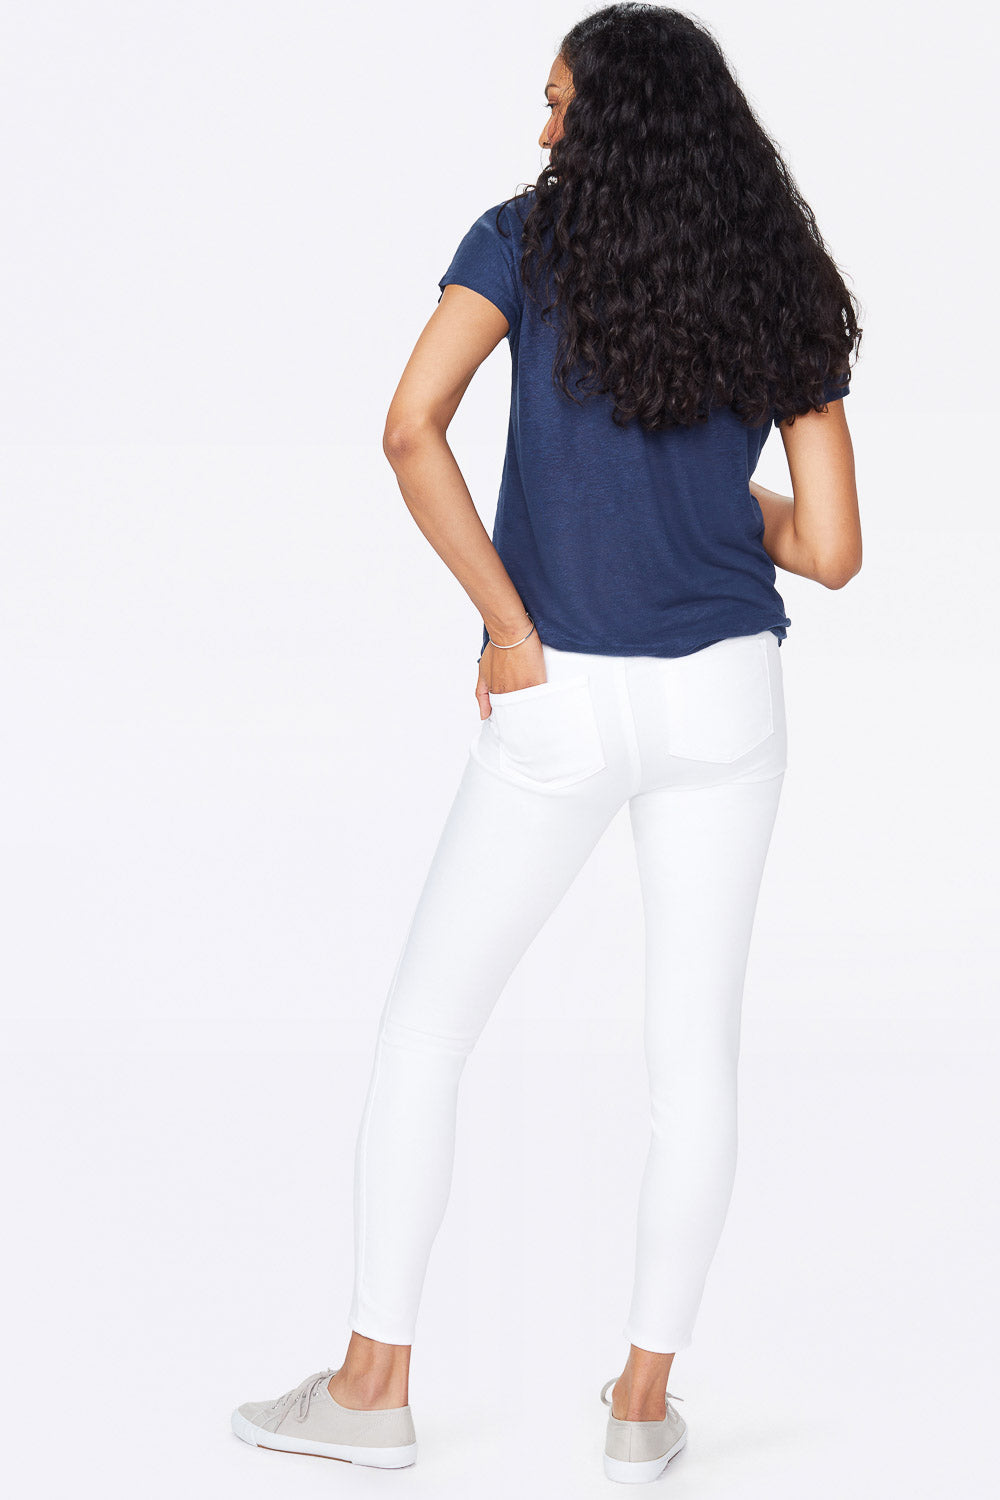 NYDJ Skinny Maternity Jeans  - Optic White